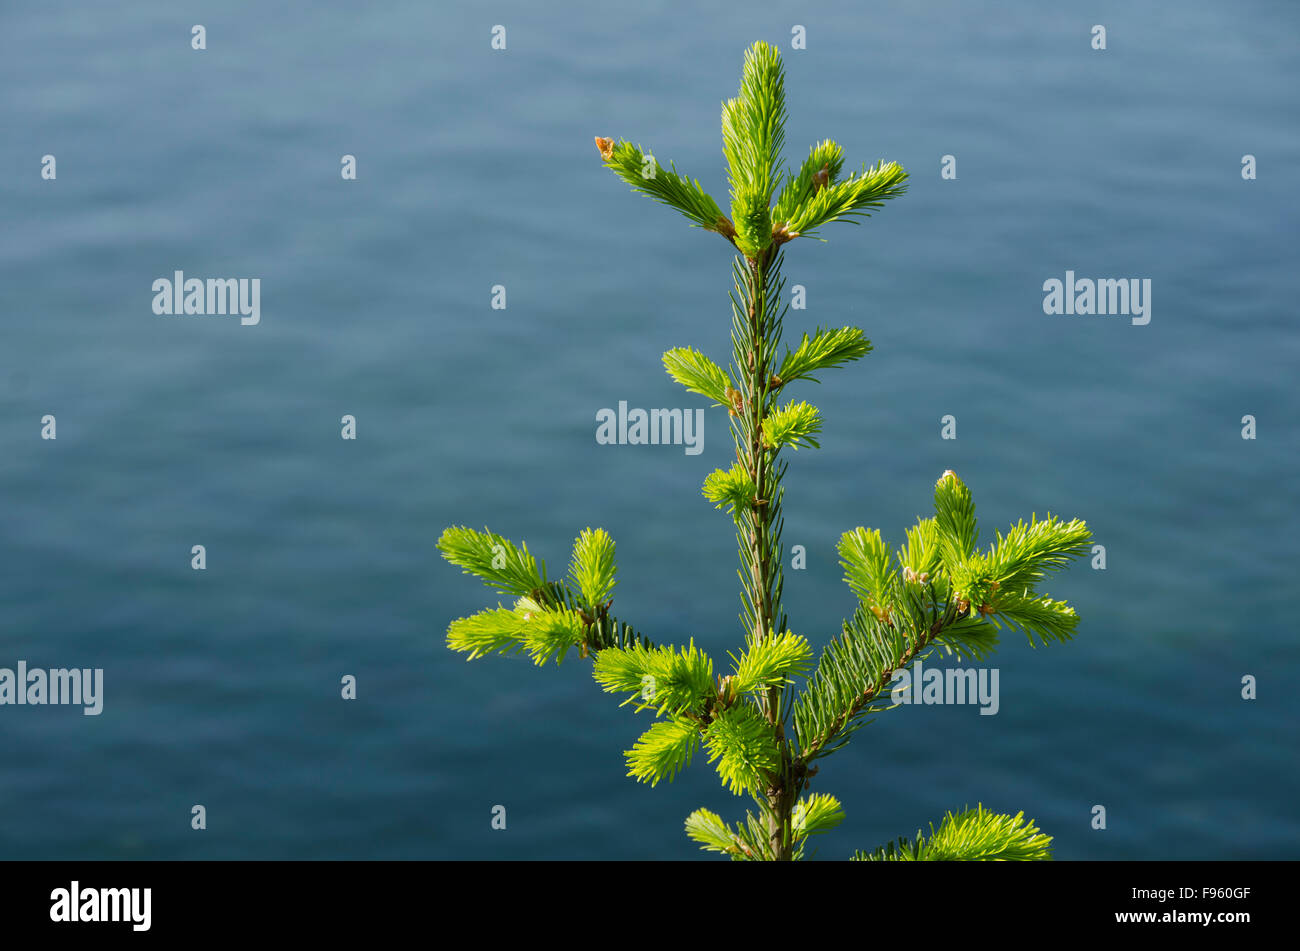 Young Douglas fir,  Pseudotsuga menziesii, on seashore, British Columbia, Canada Stock Photo